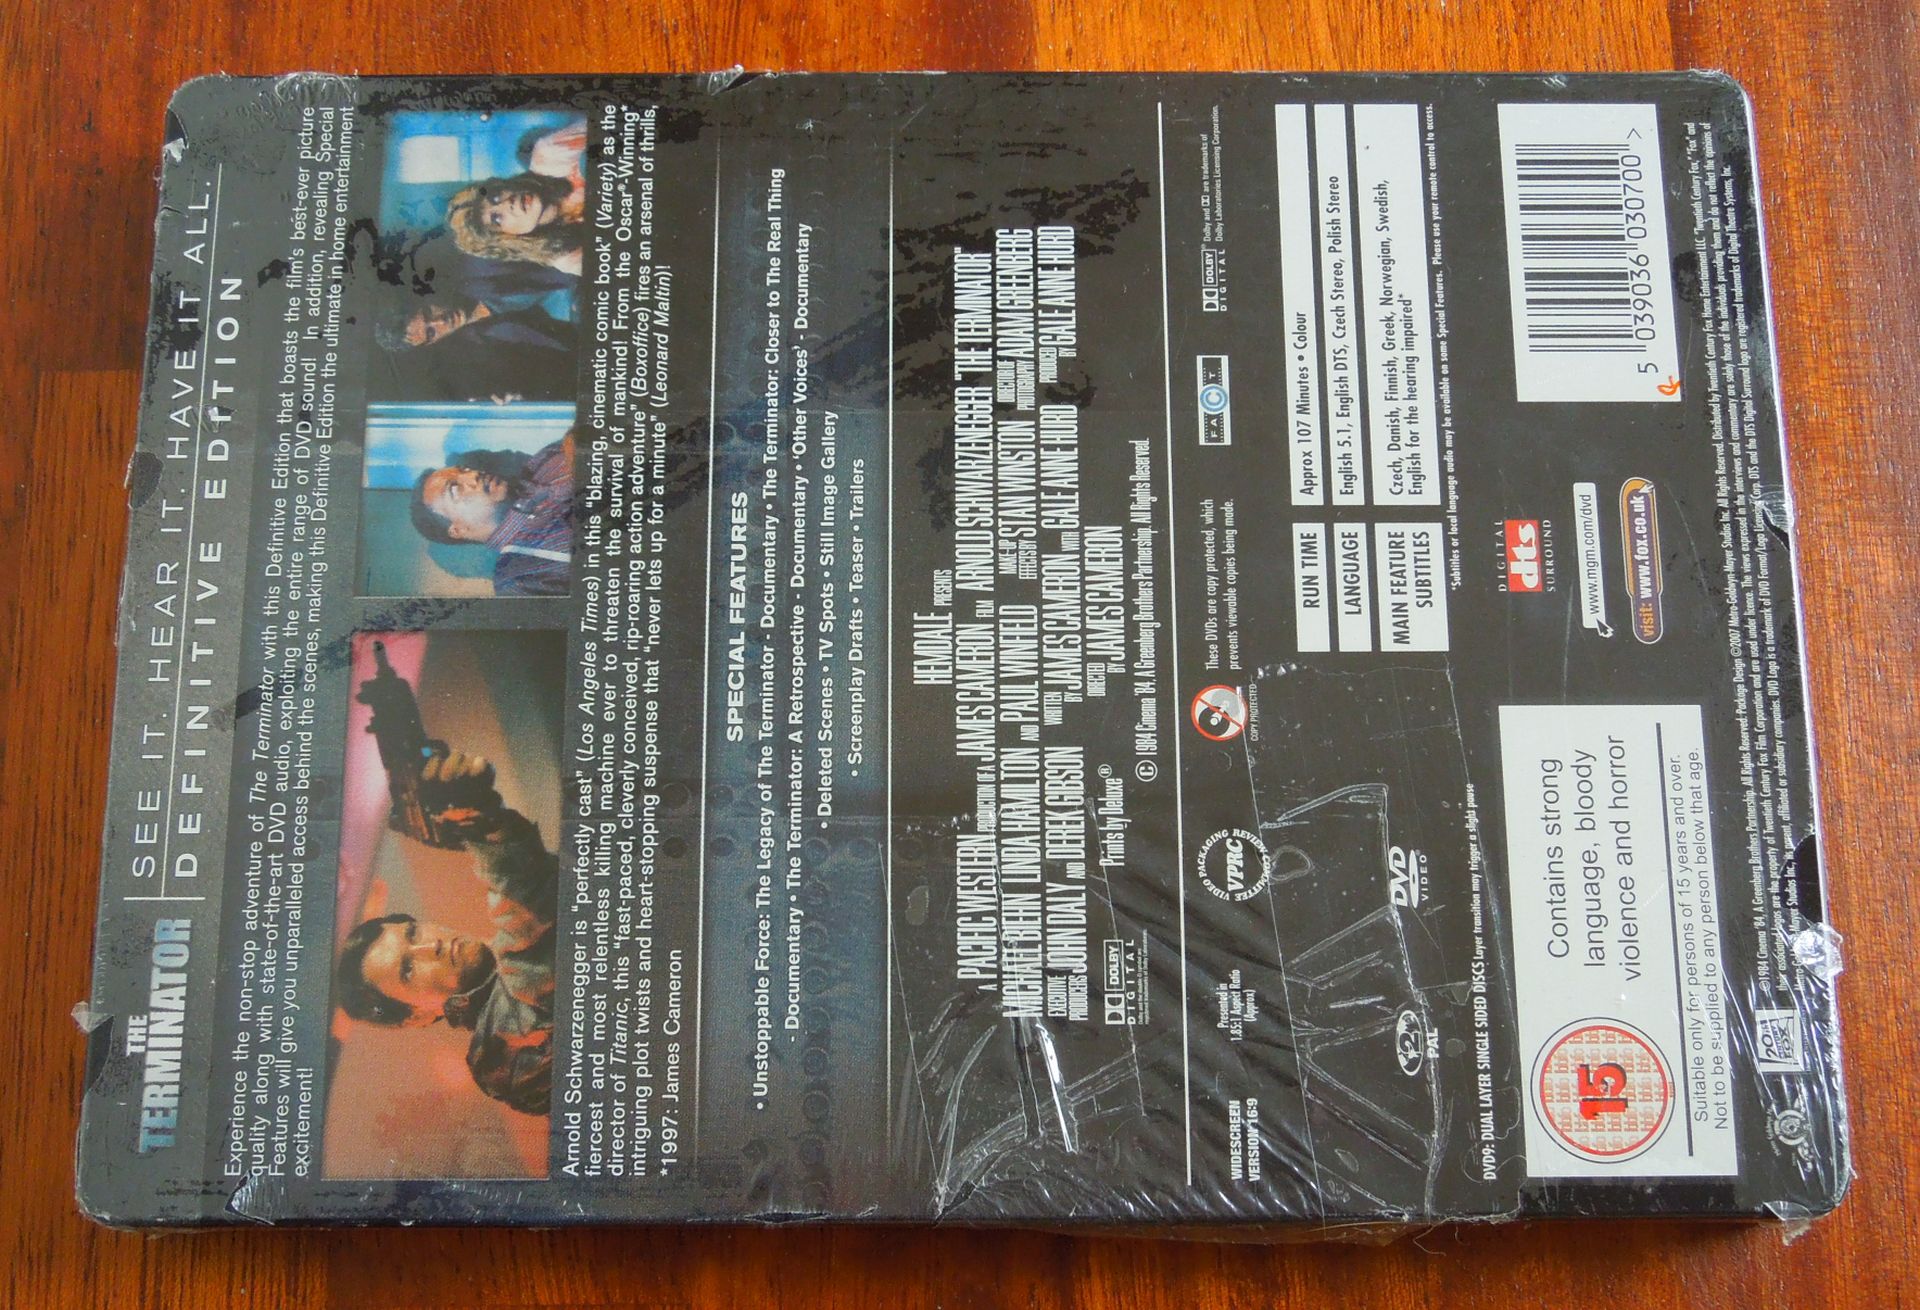 The Terminator DVD UK R